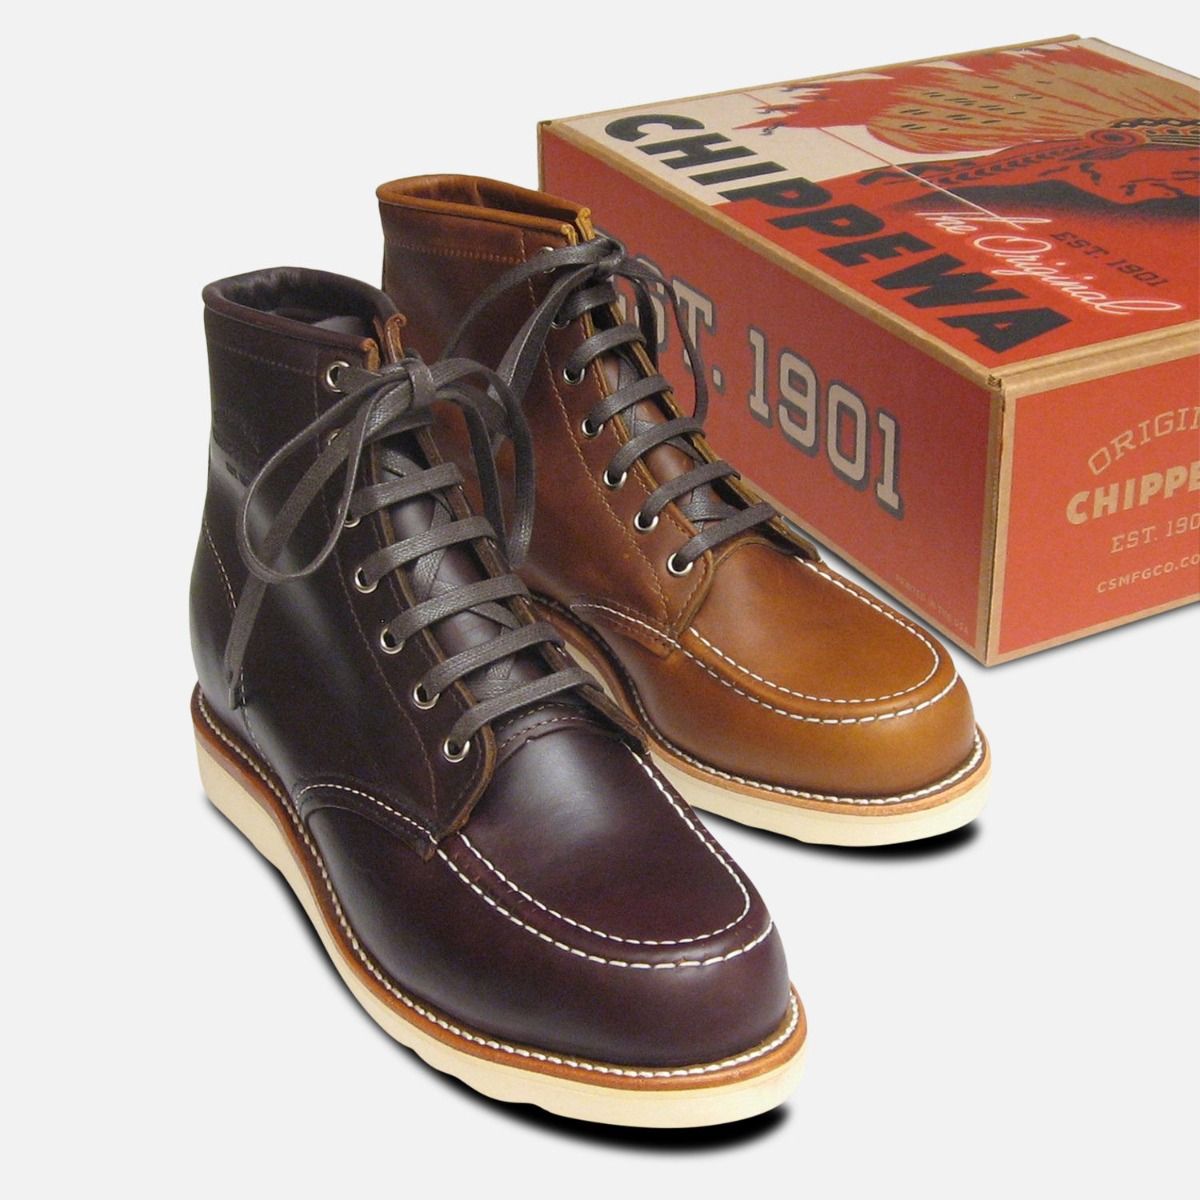 Chippewa Shoes Tan Renegade Leather 1901M22 Vibram Sole Moc Toe Boots